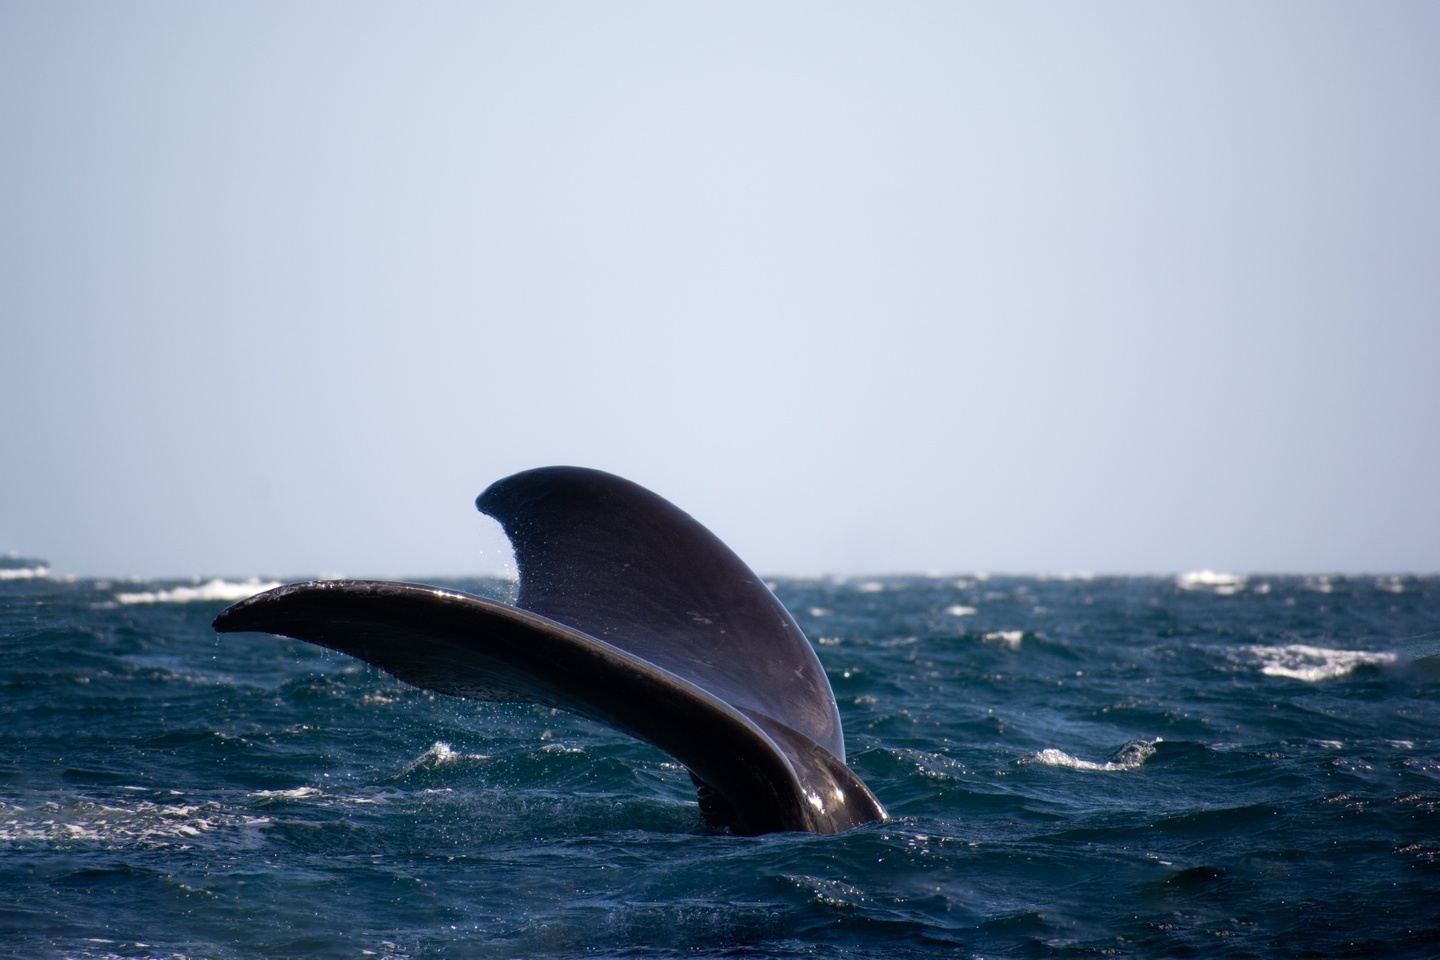 Excursion avistaje de ballenas submarino! Puerto Madryn